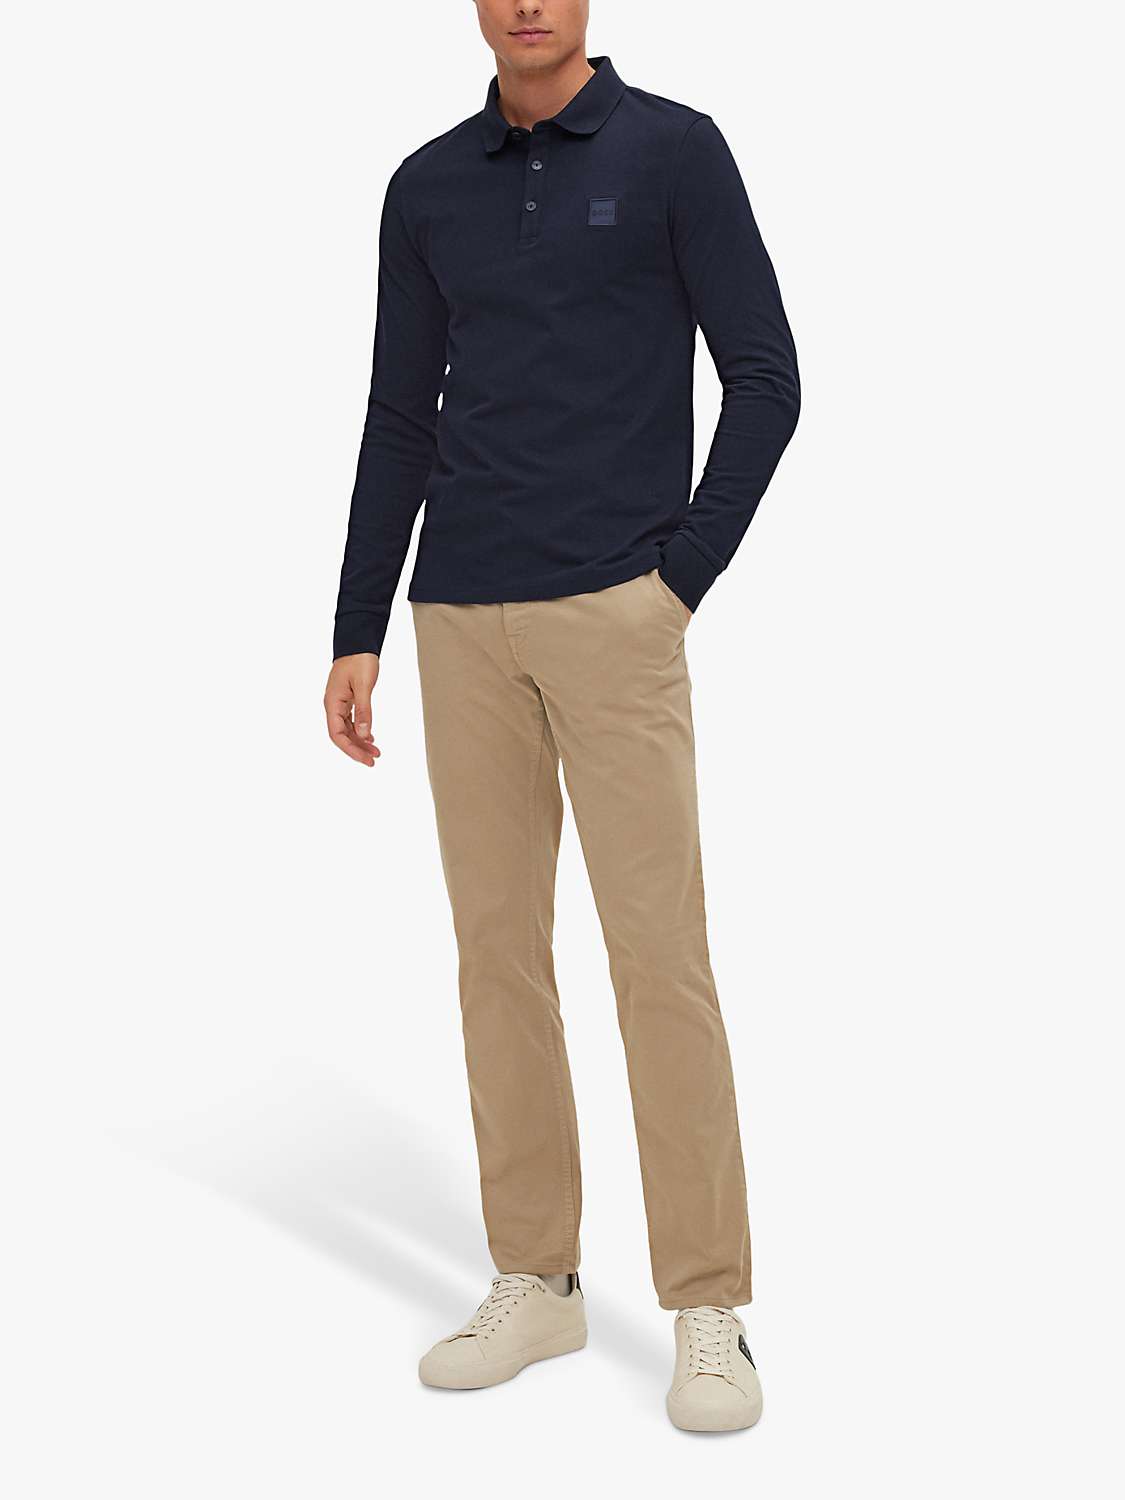 Buy BOSS Passerby Long Sleeve Polo Shirt, Dark Blue Online at johnlewis.com